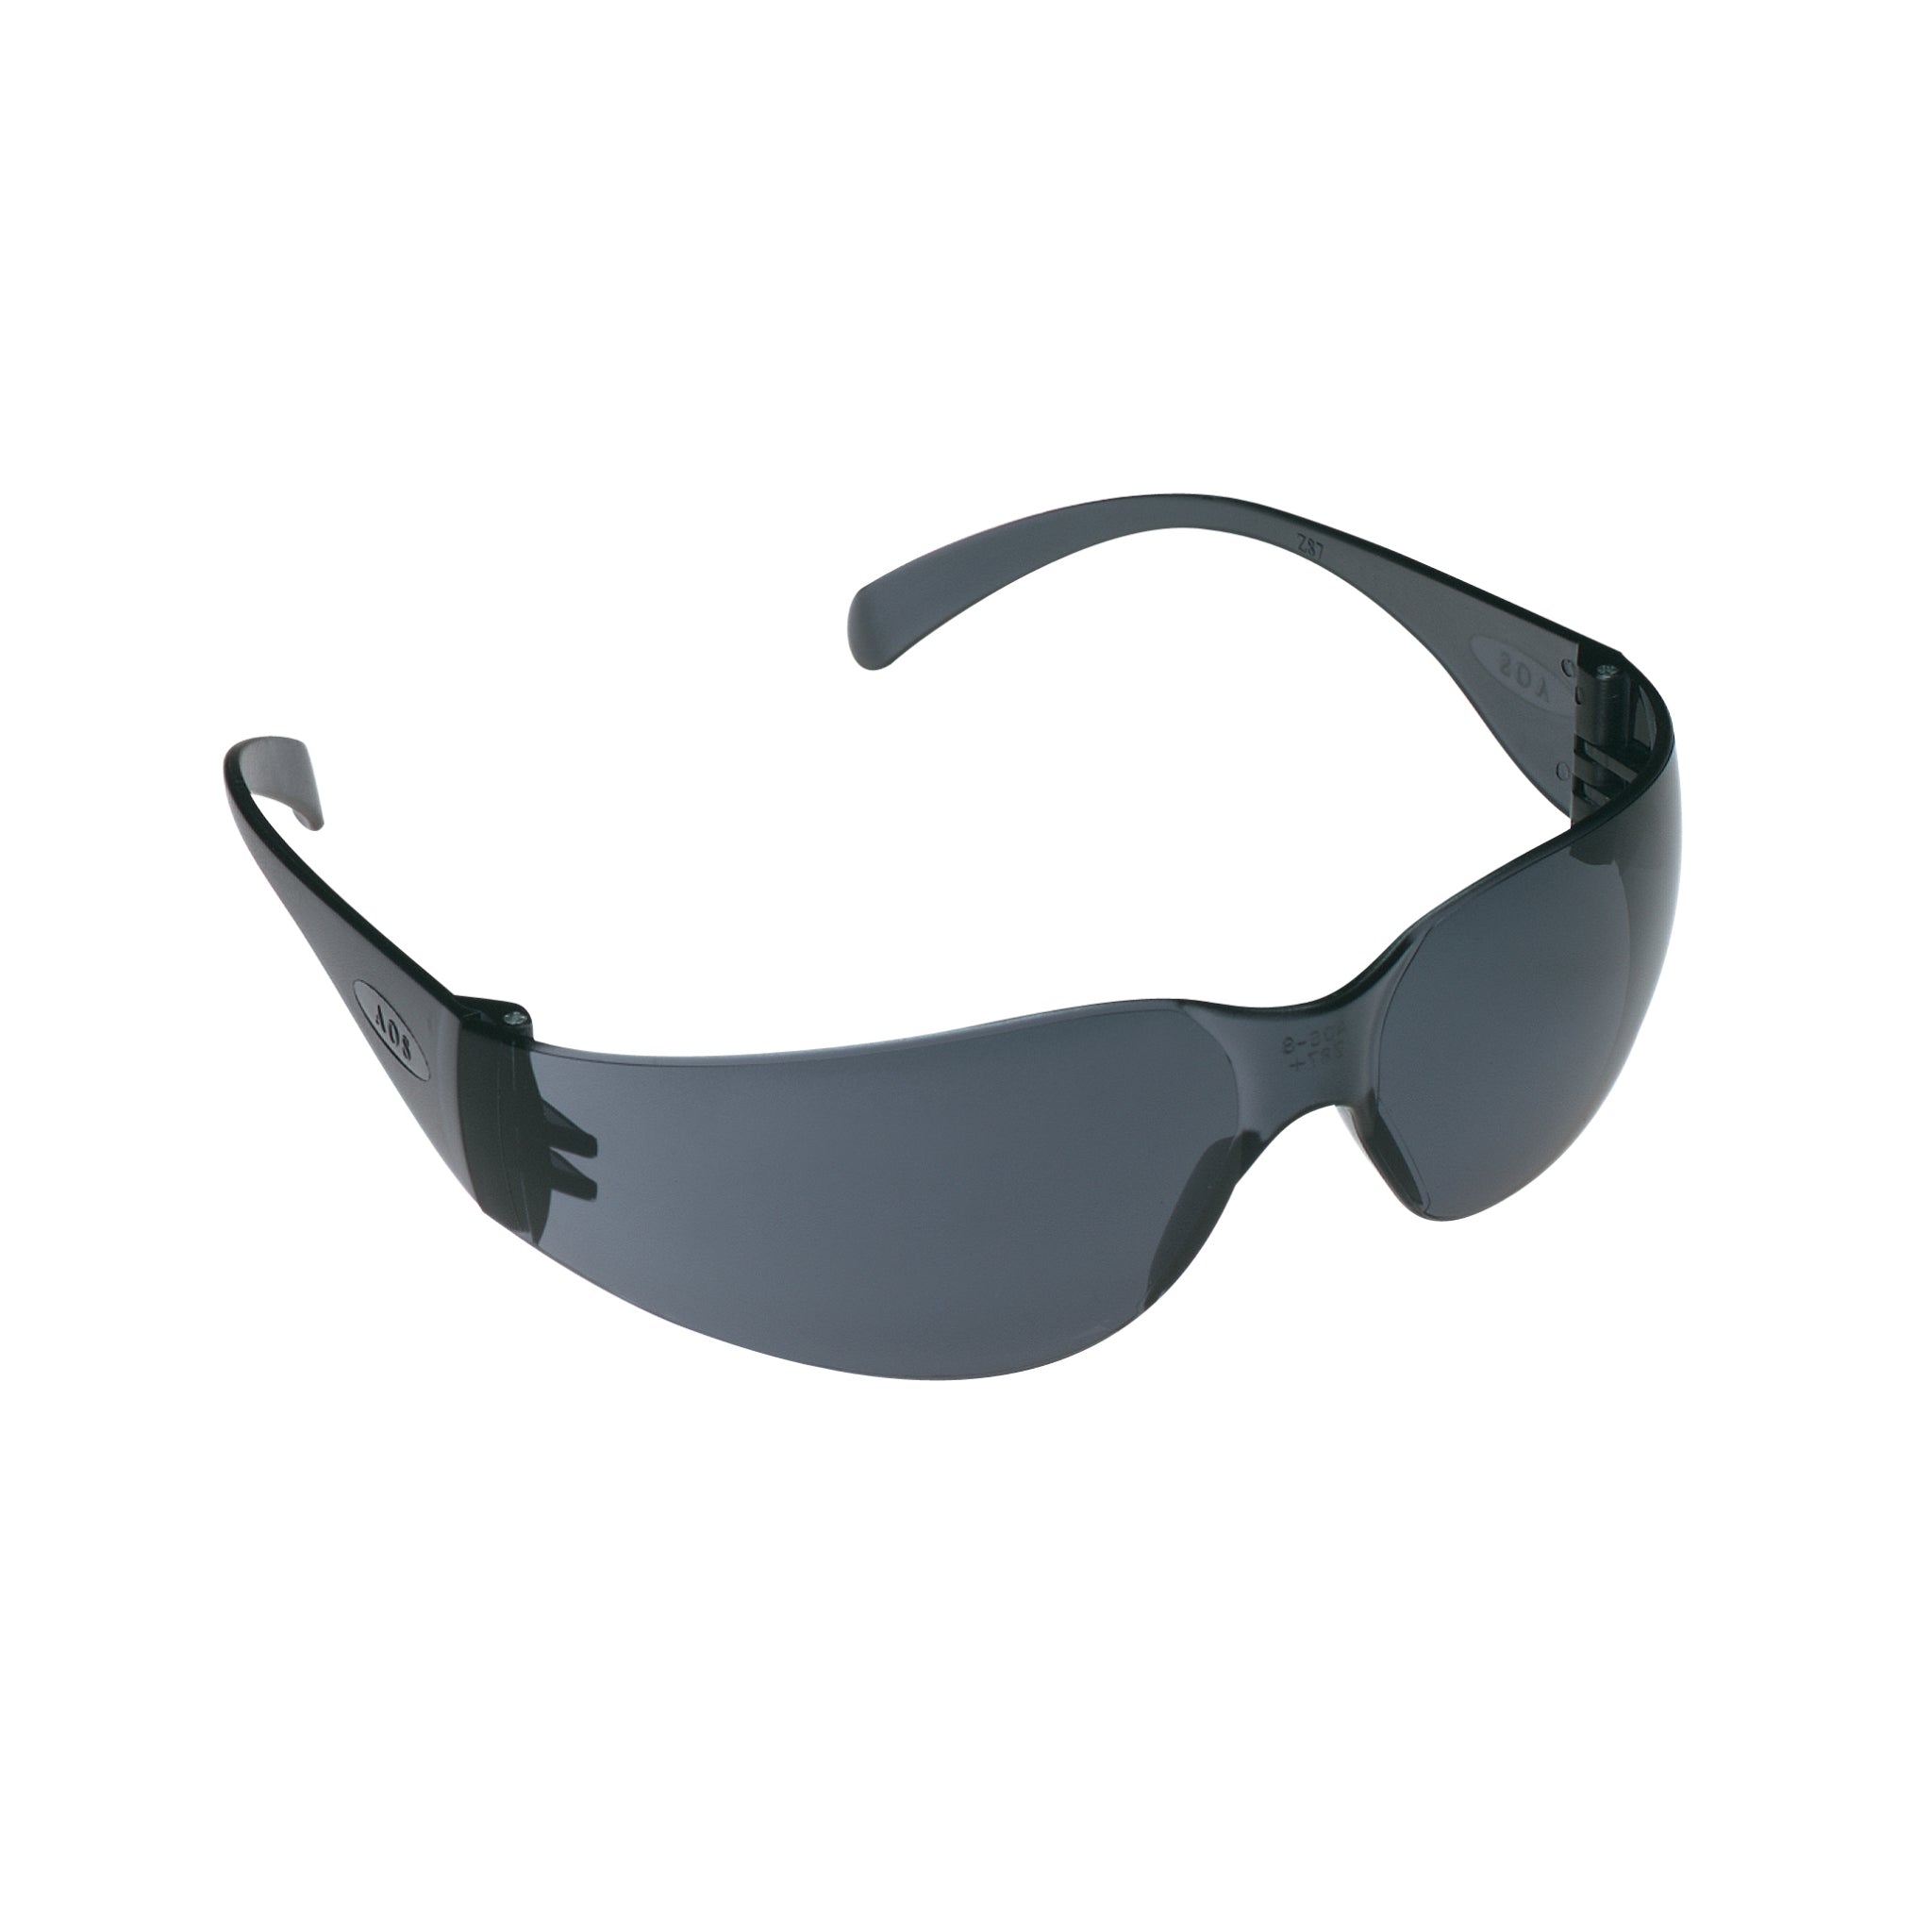 AO Safety Virtua Safety Glasses - Gray, Anti-Fog  Lens